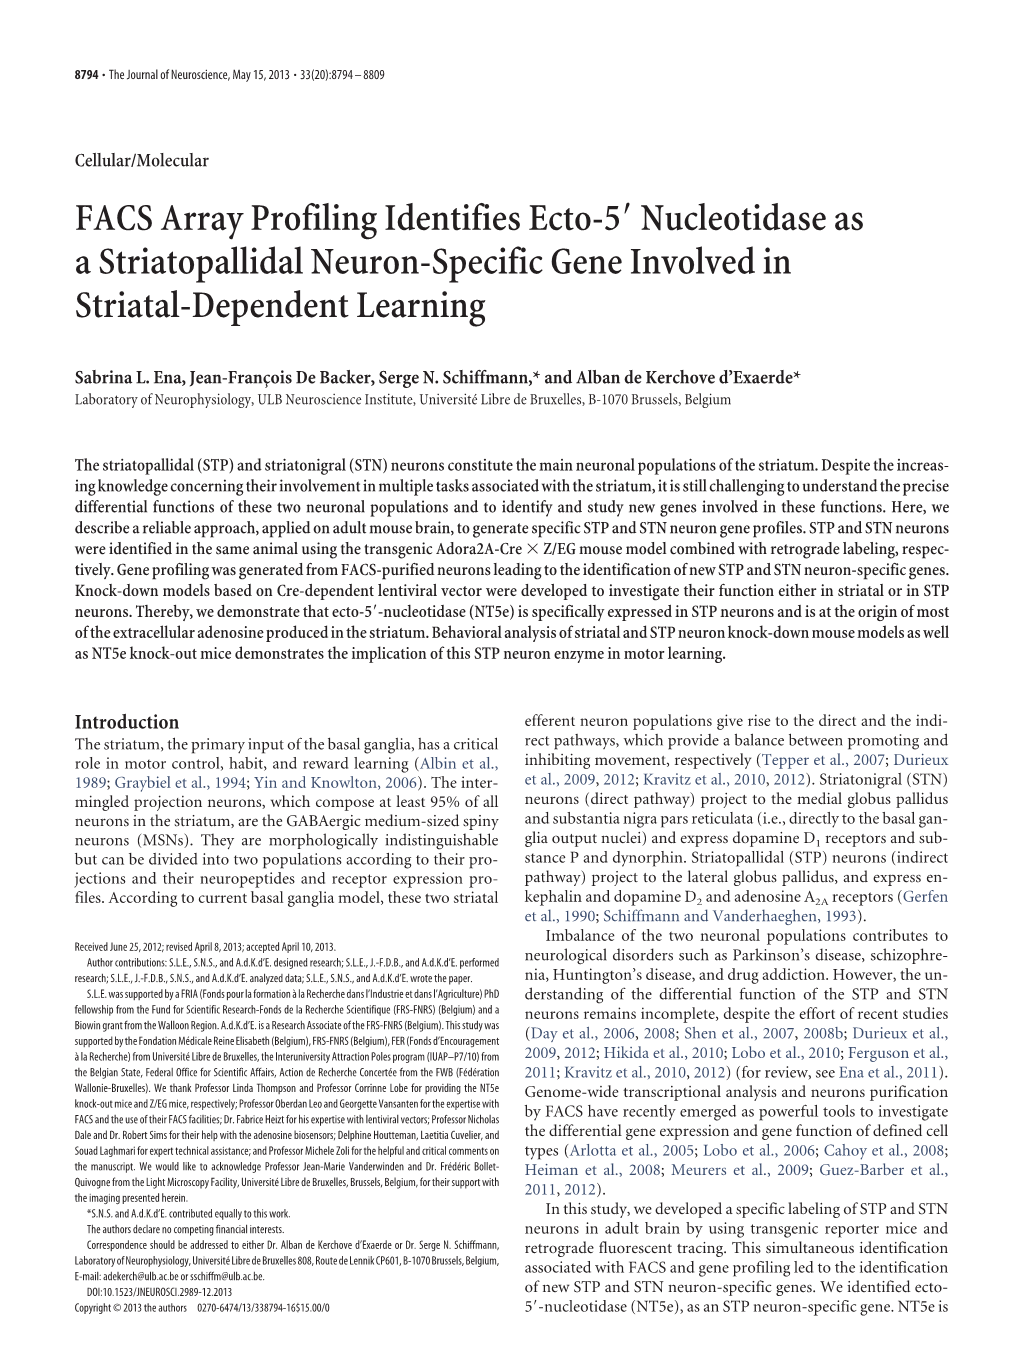 FACS Array Profiling Identifies Ecto-5 Nucleotidase As a Striatopallidal